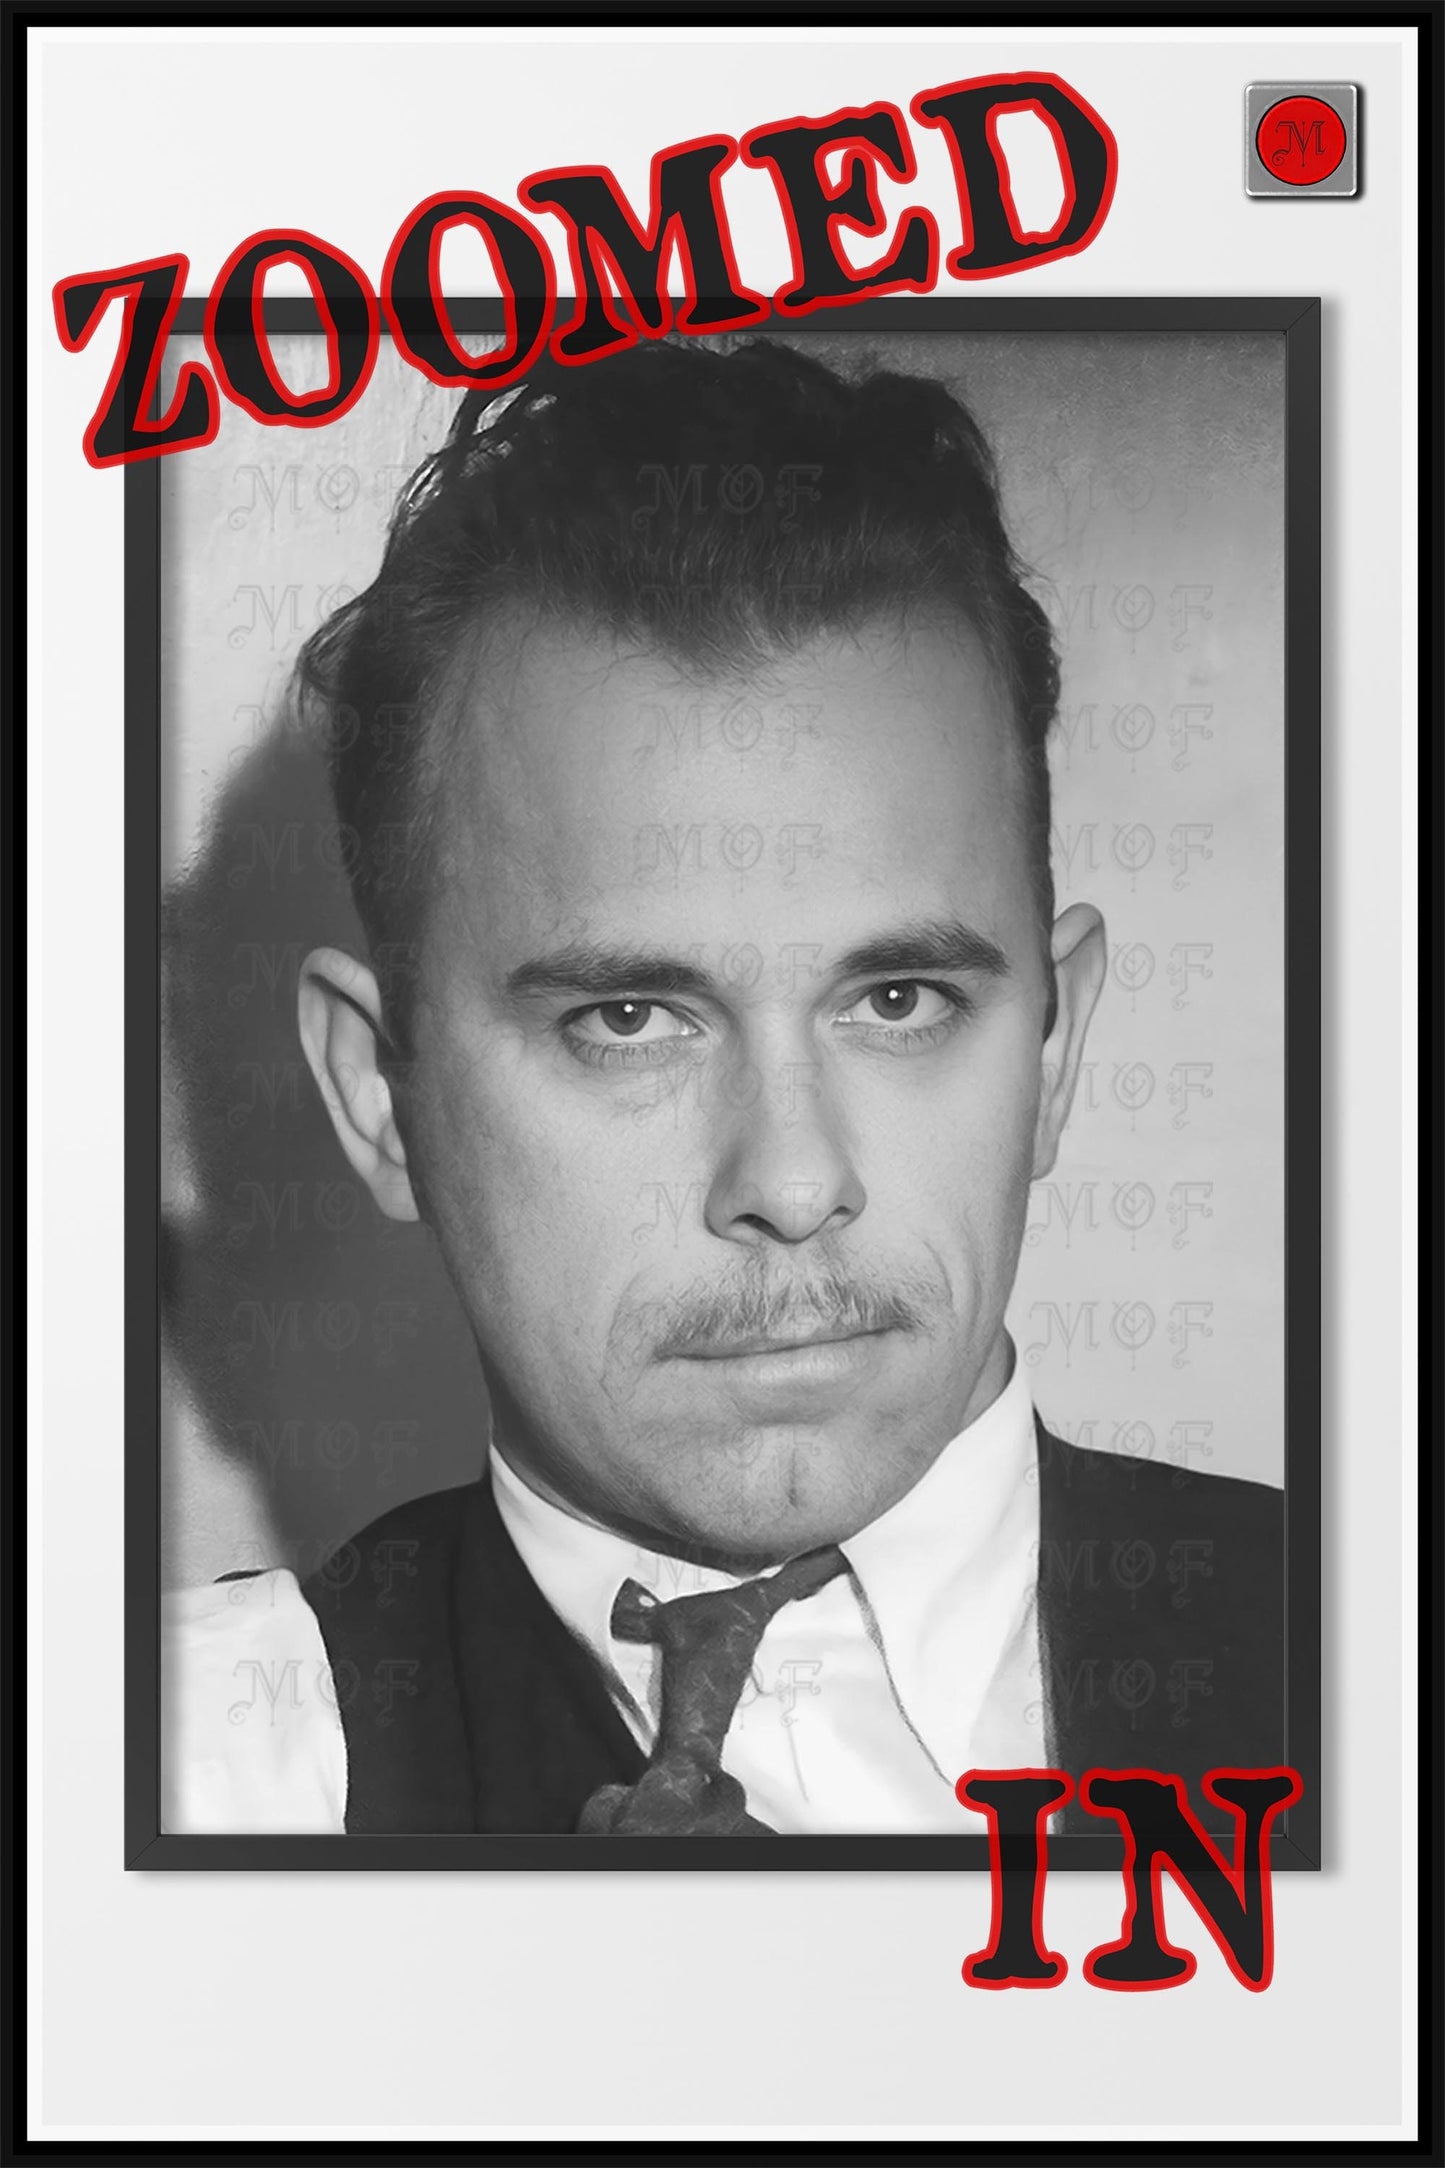 John Dillinger Poster Wanted Gangster